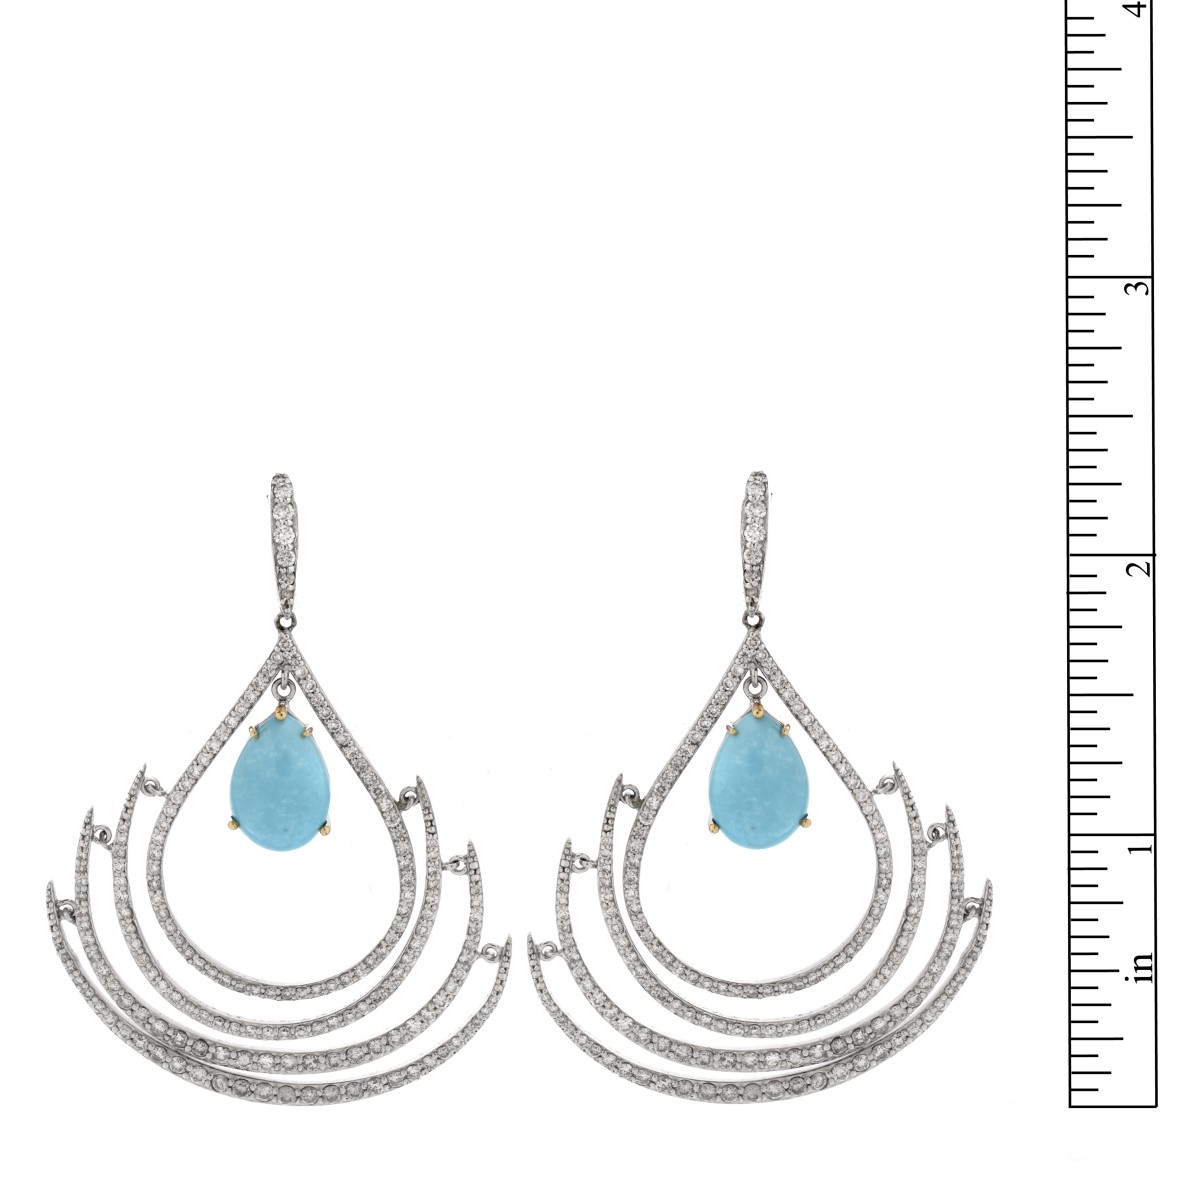 Diamond, Turquoise and 14K Earrings.